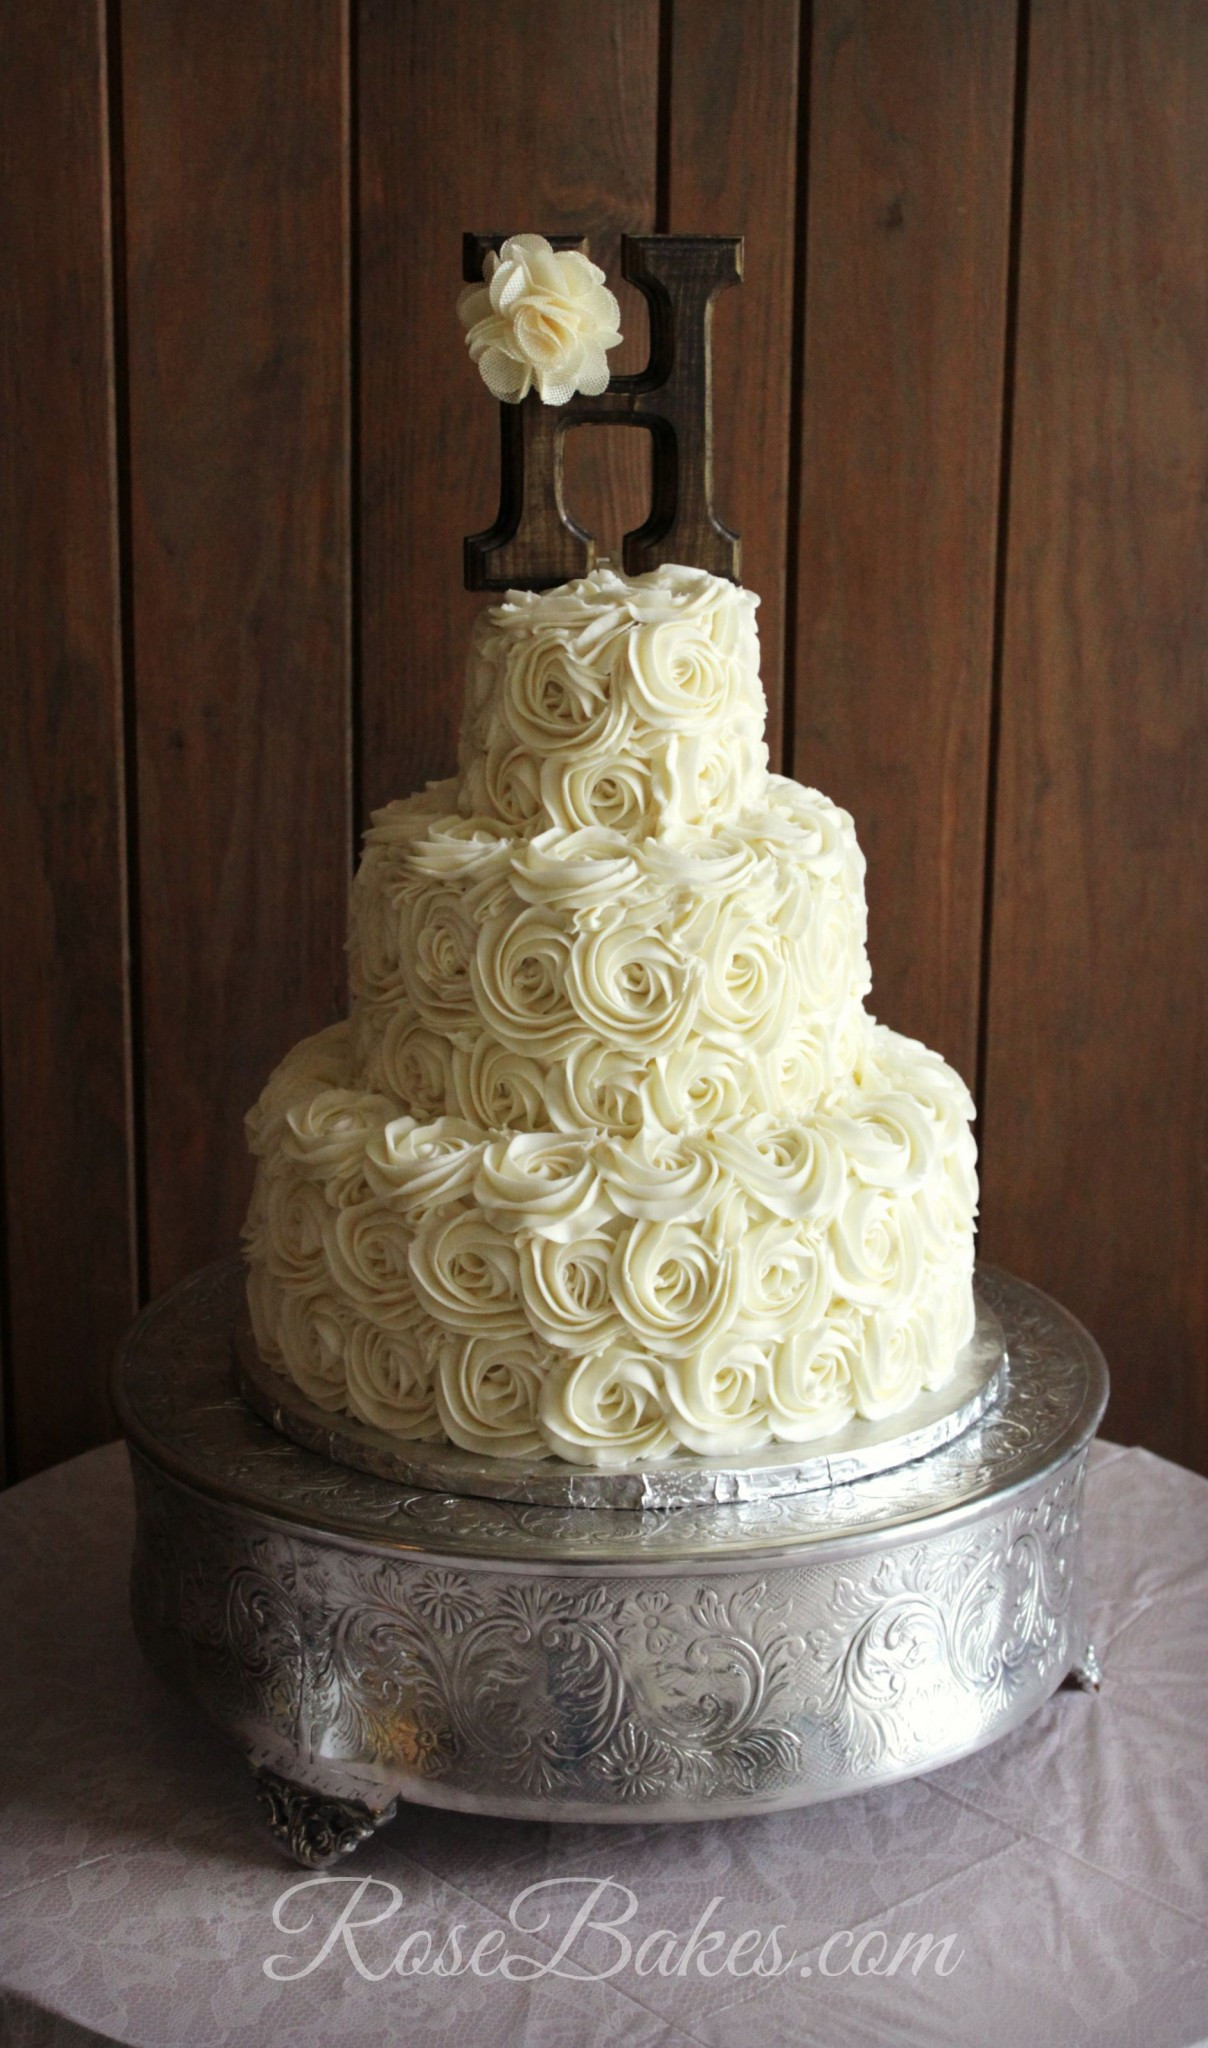 Wedding Cakes Roses
 Rustic Buttercream Roses Wedding Cake Rose Bakes